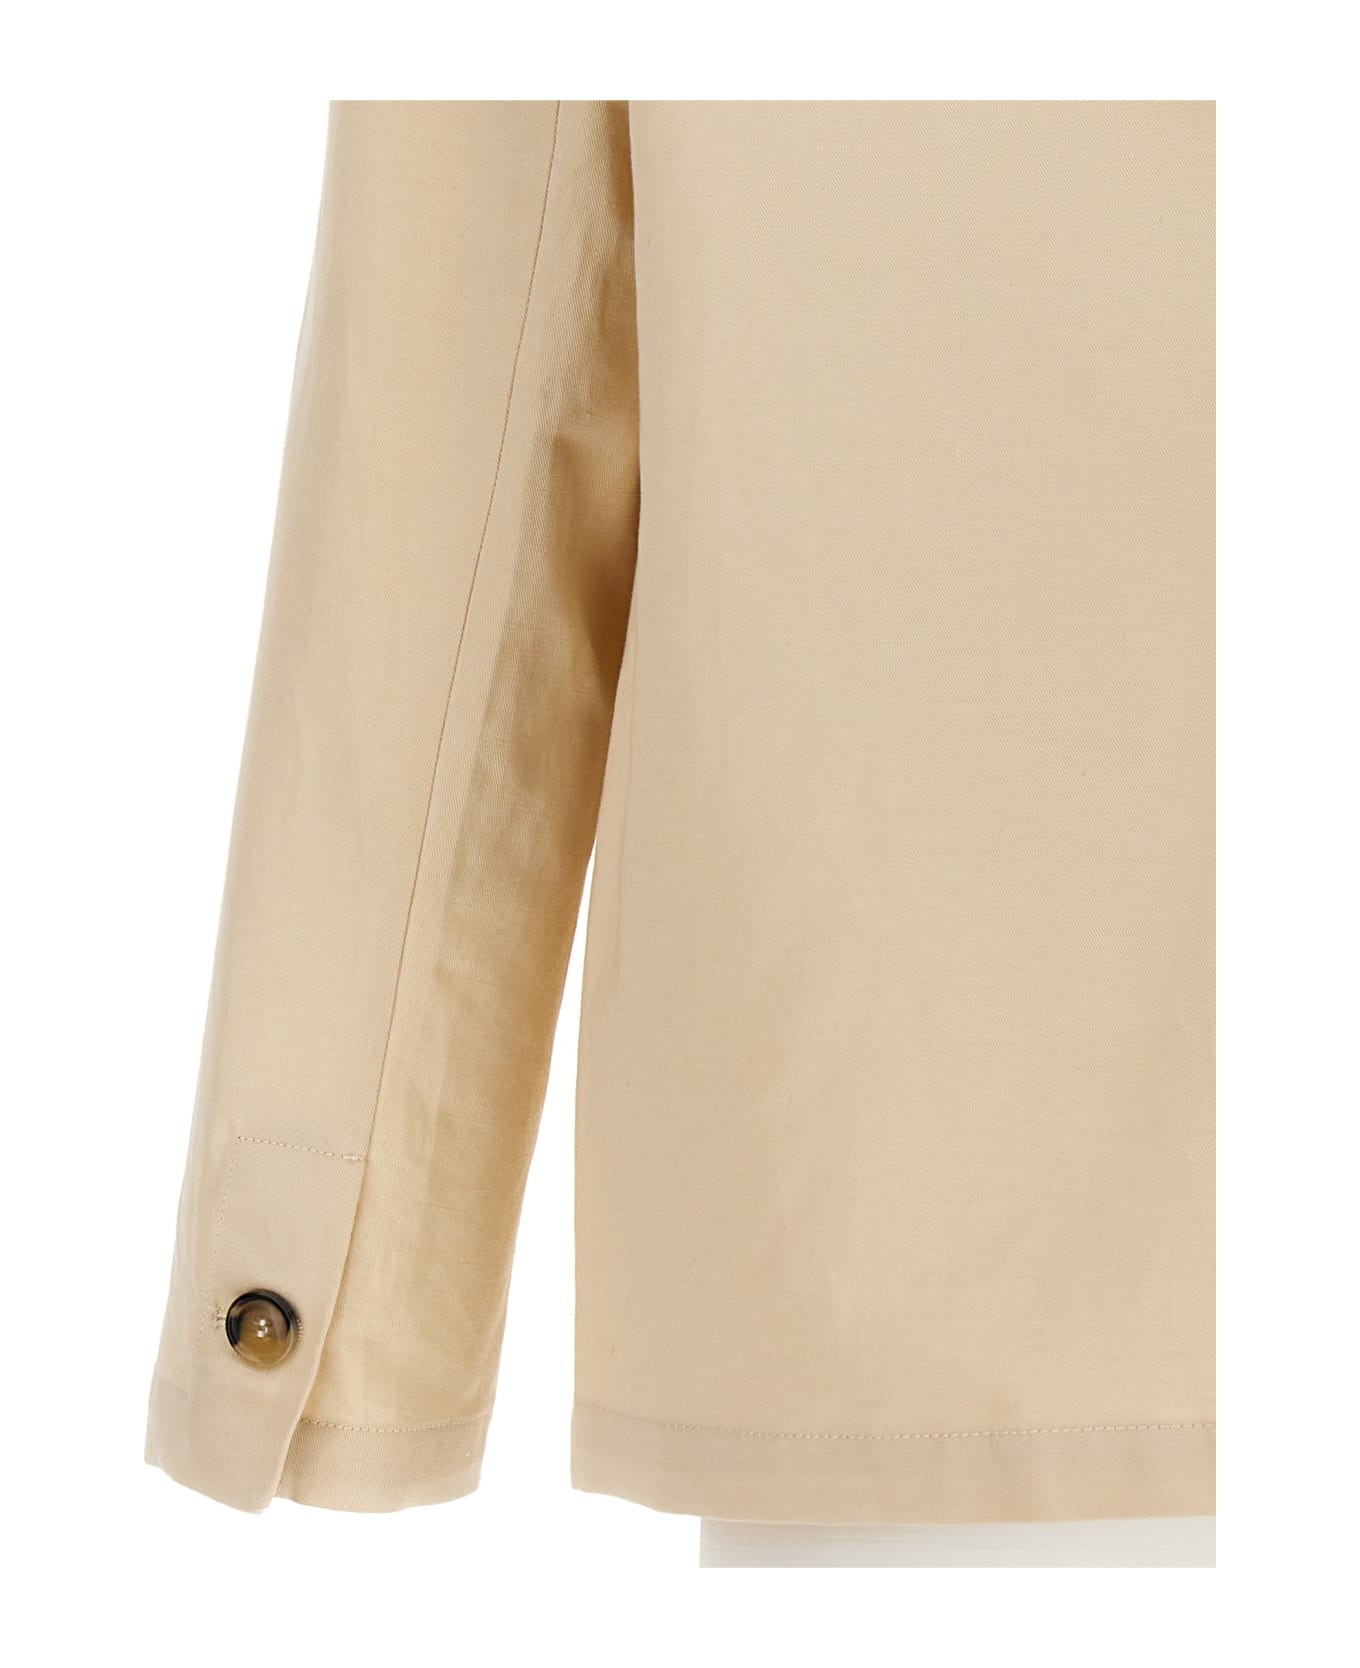 PT01 Single Breast Cotton Linen Jacket - White